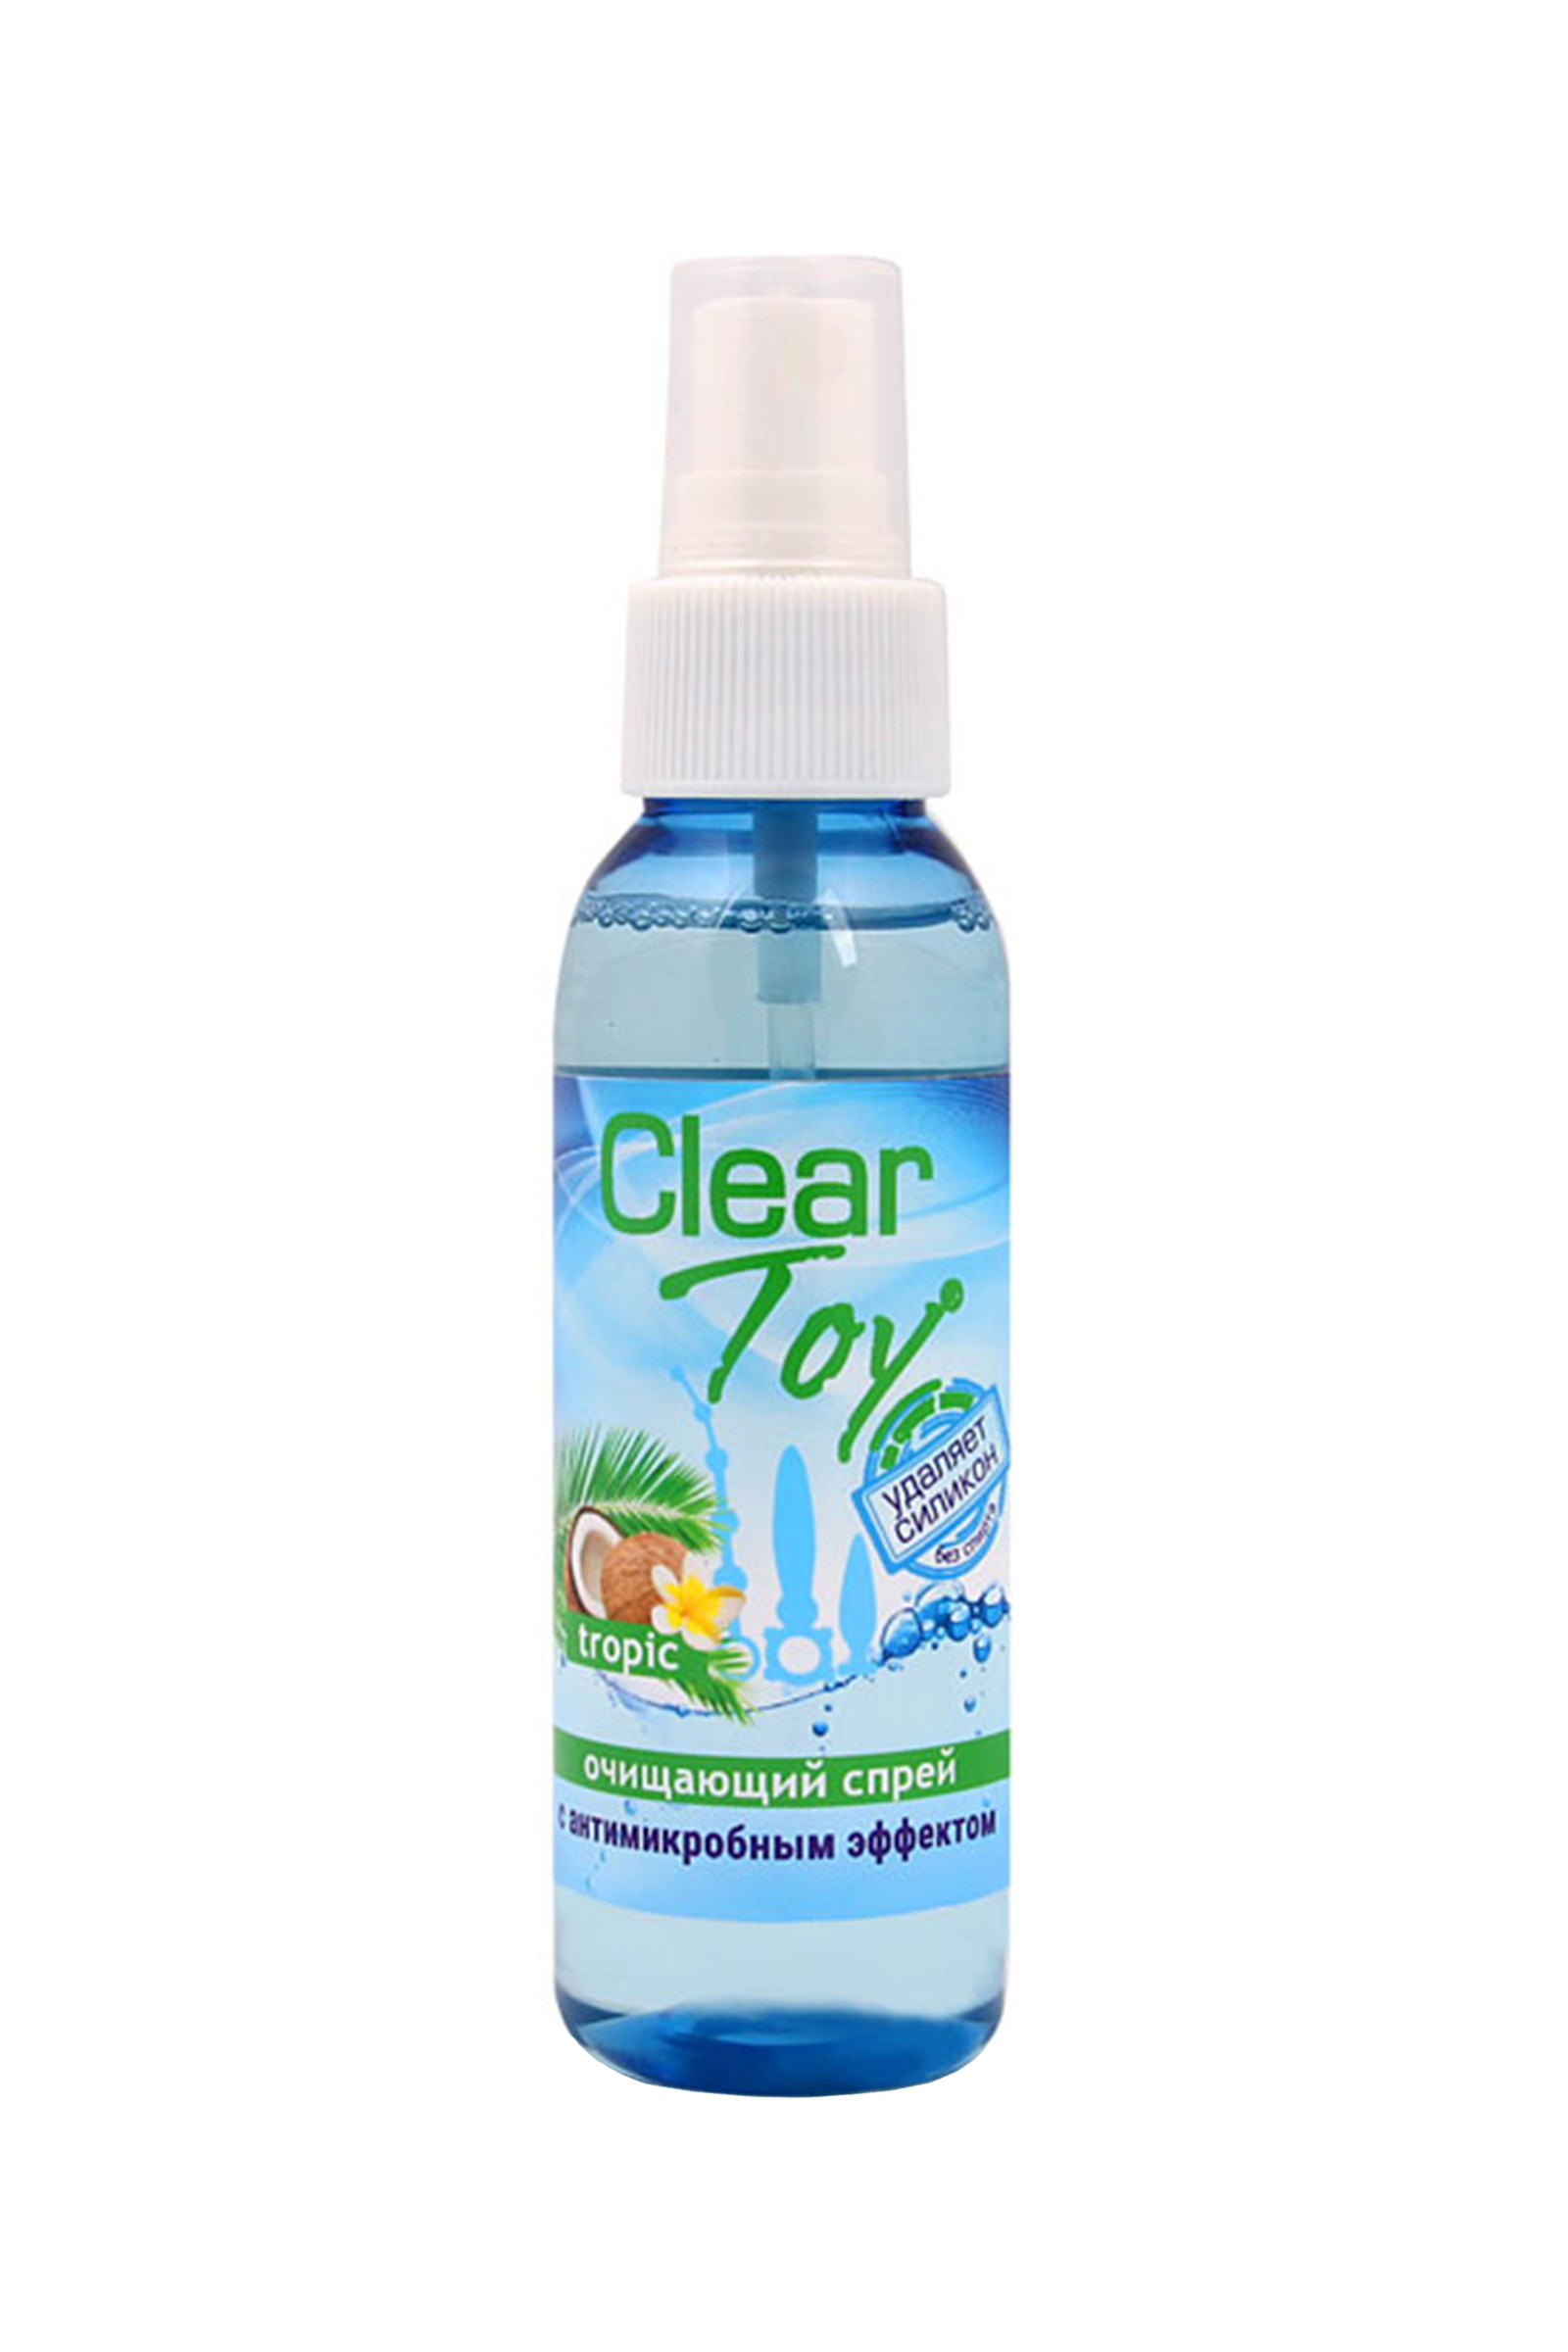 Очищающий спрей  "CLEAR TOY TROPIC" с антимикробным эффектом, 100 мл. Фото N2